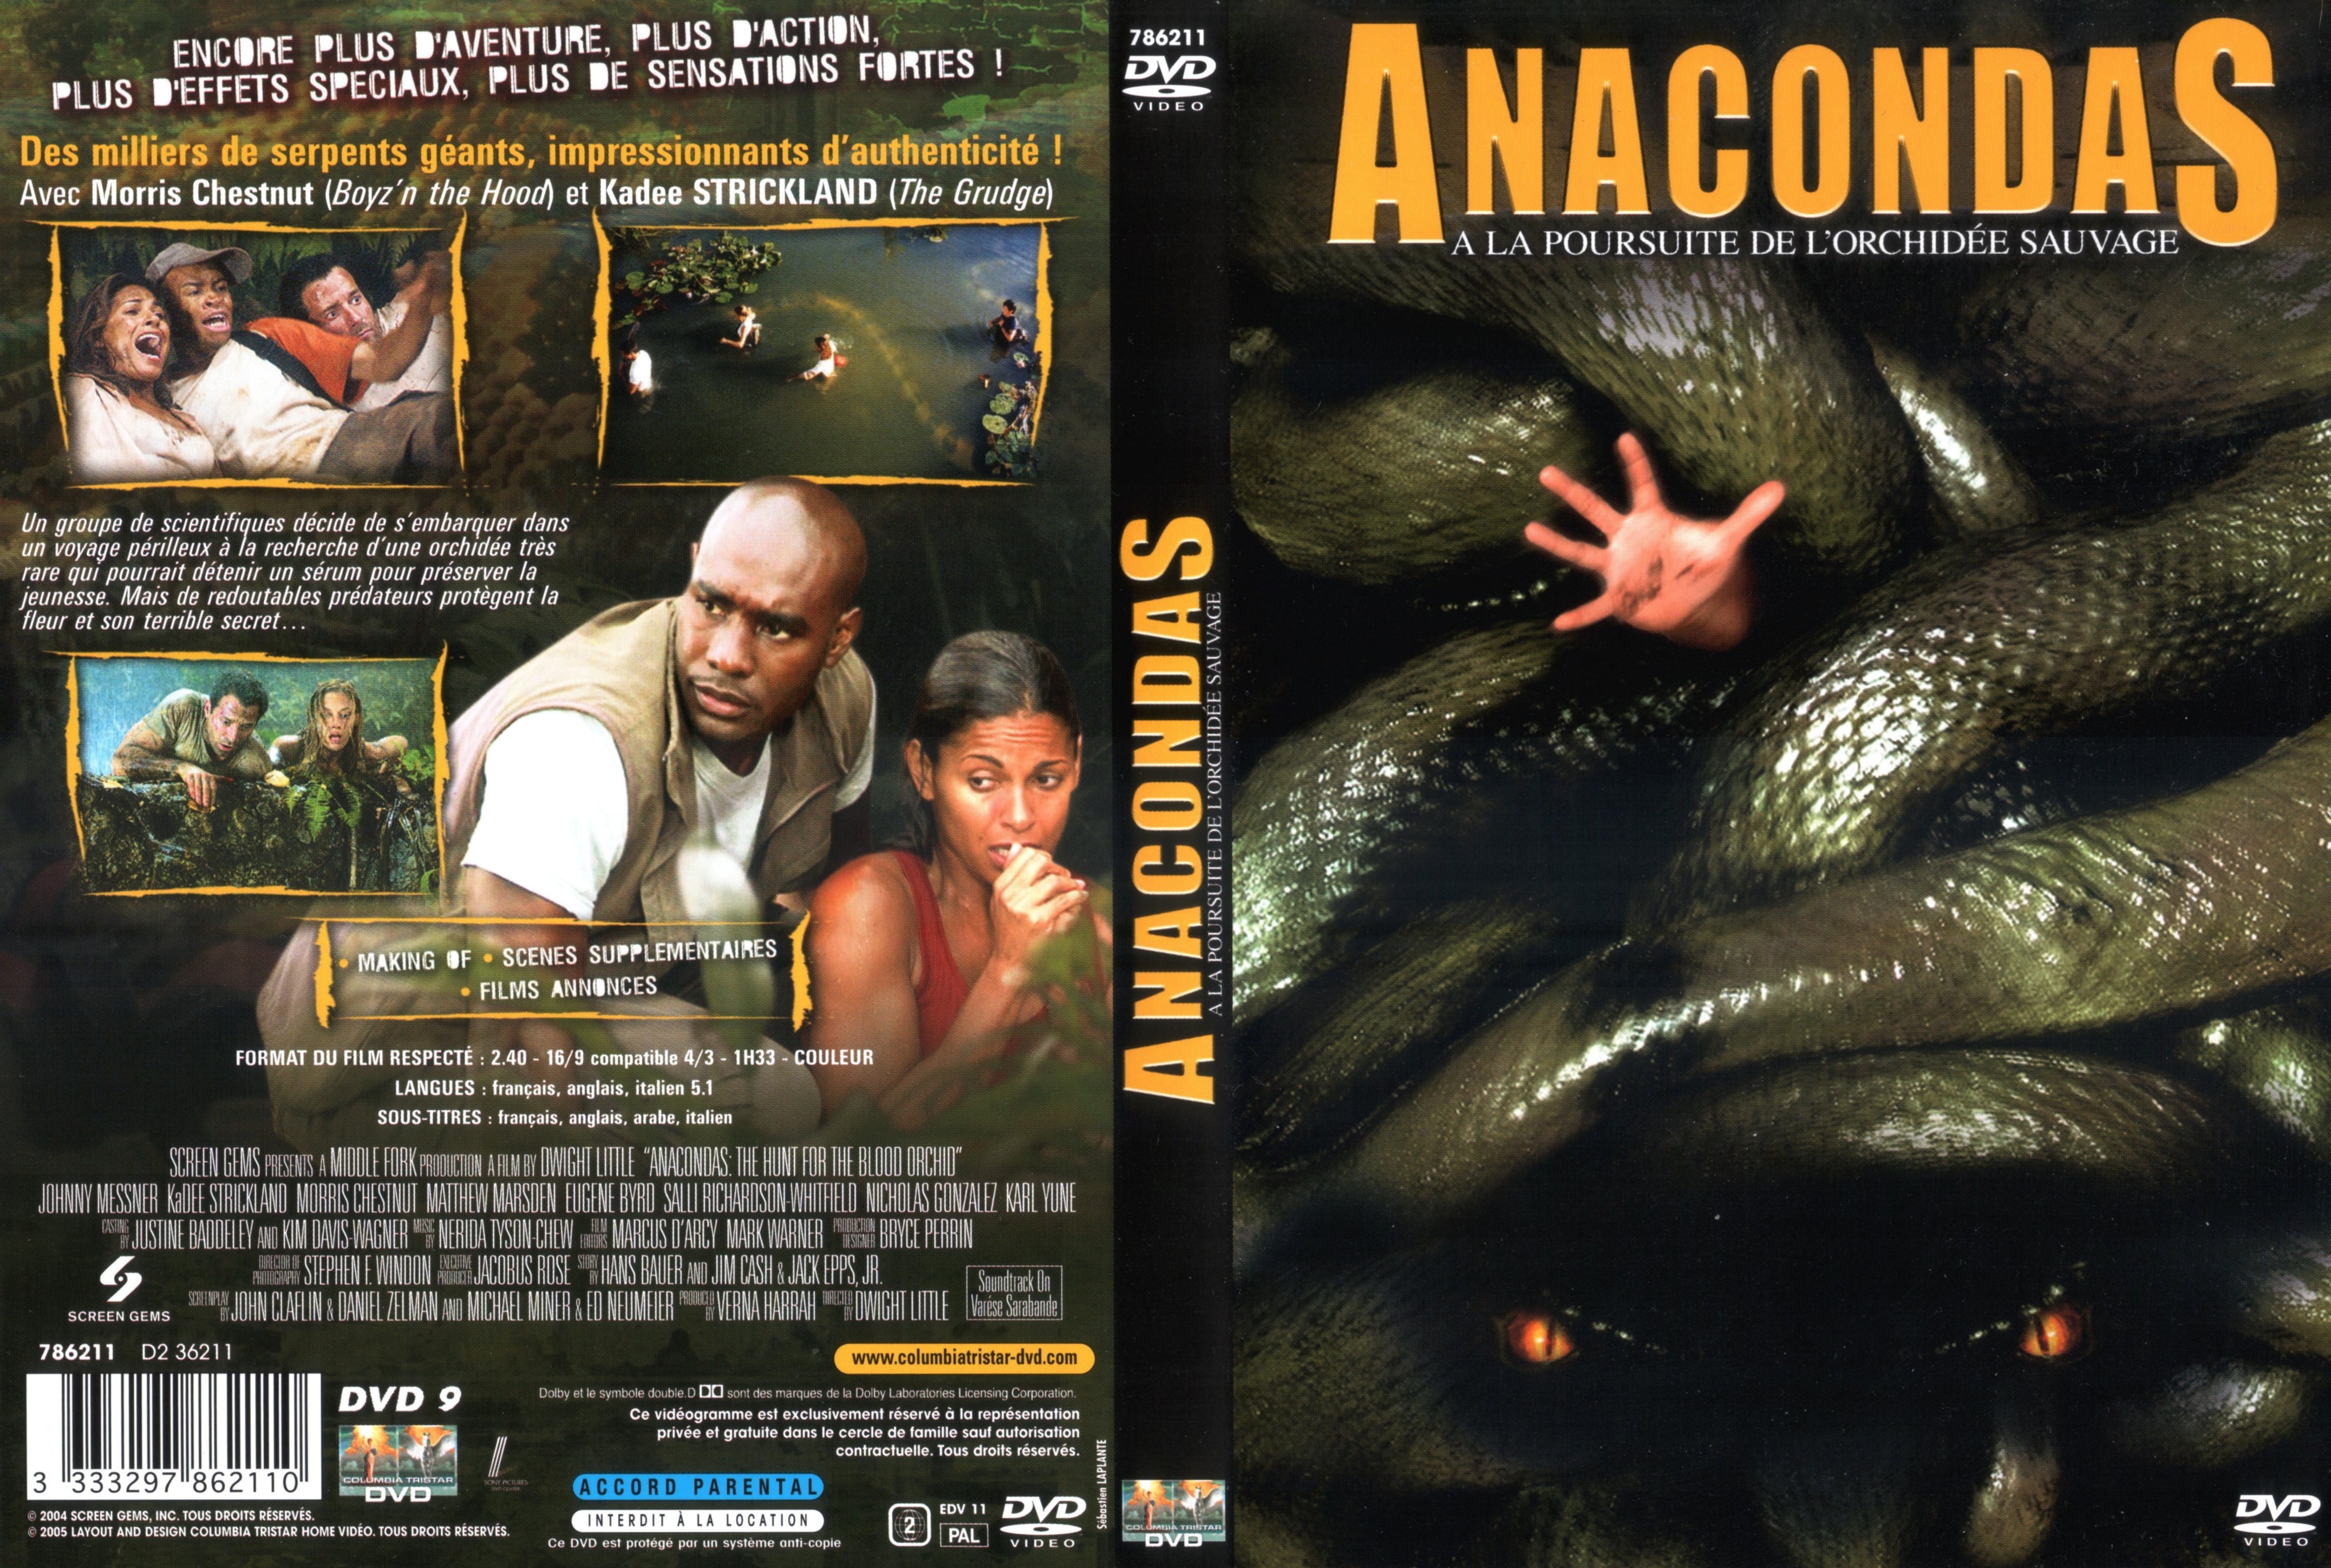 Jaquette DVD Anacondas